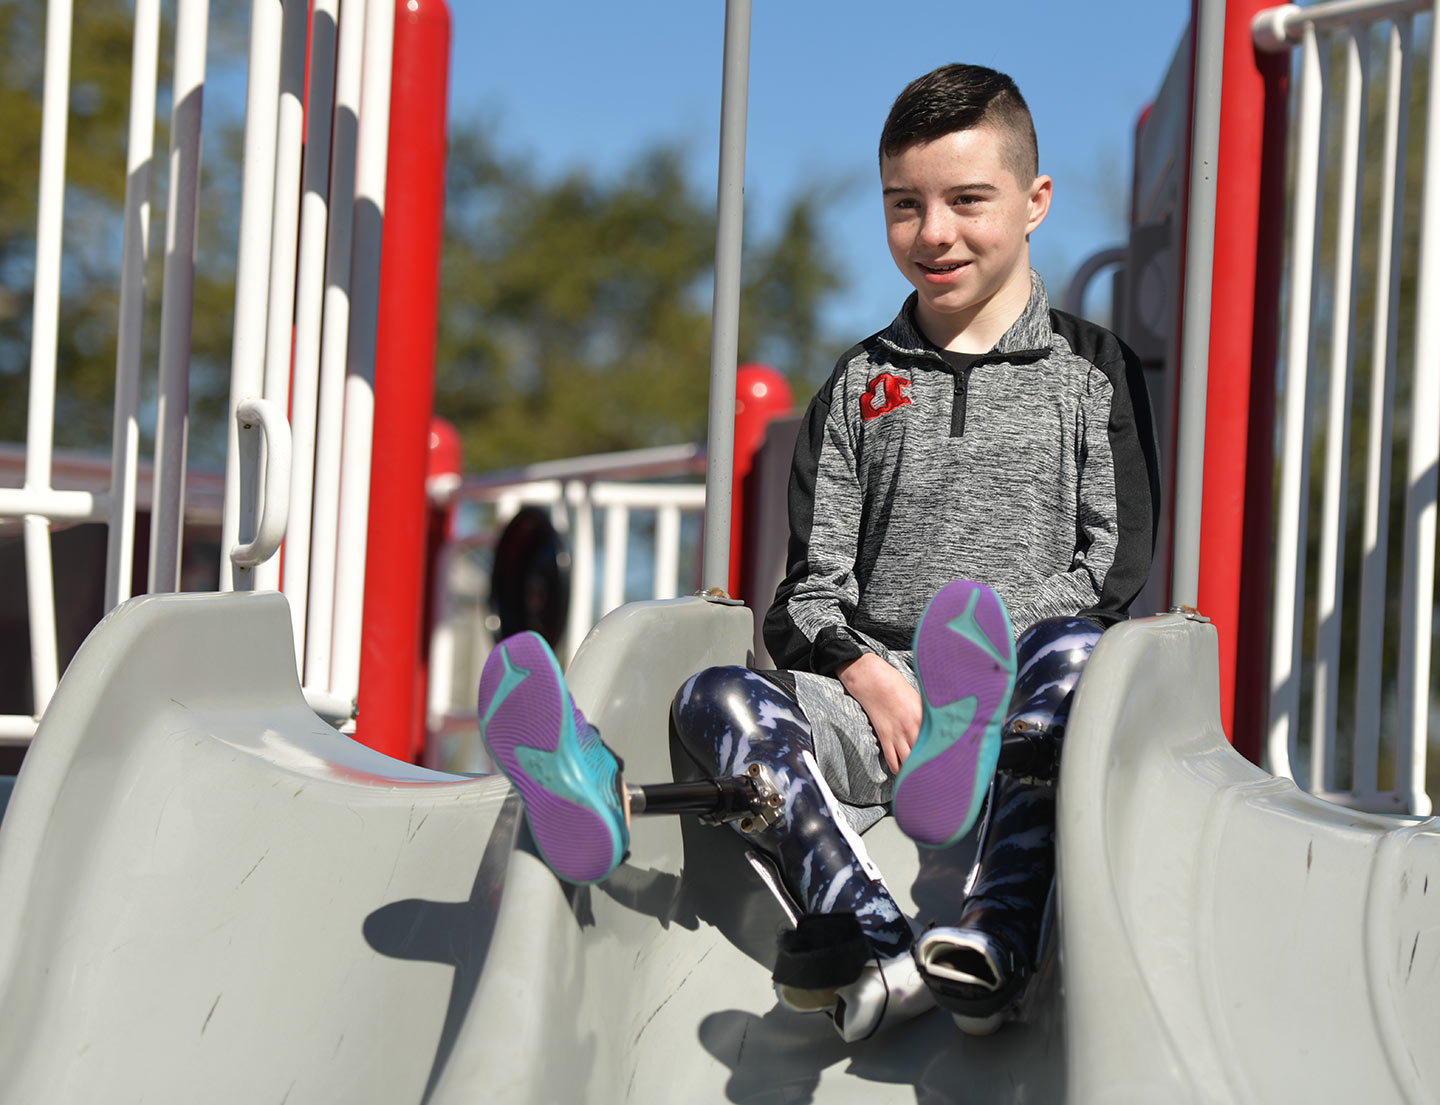 Male patient on playground slide